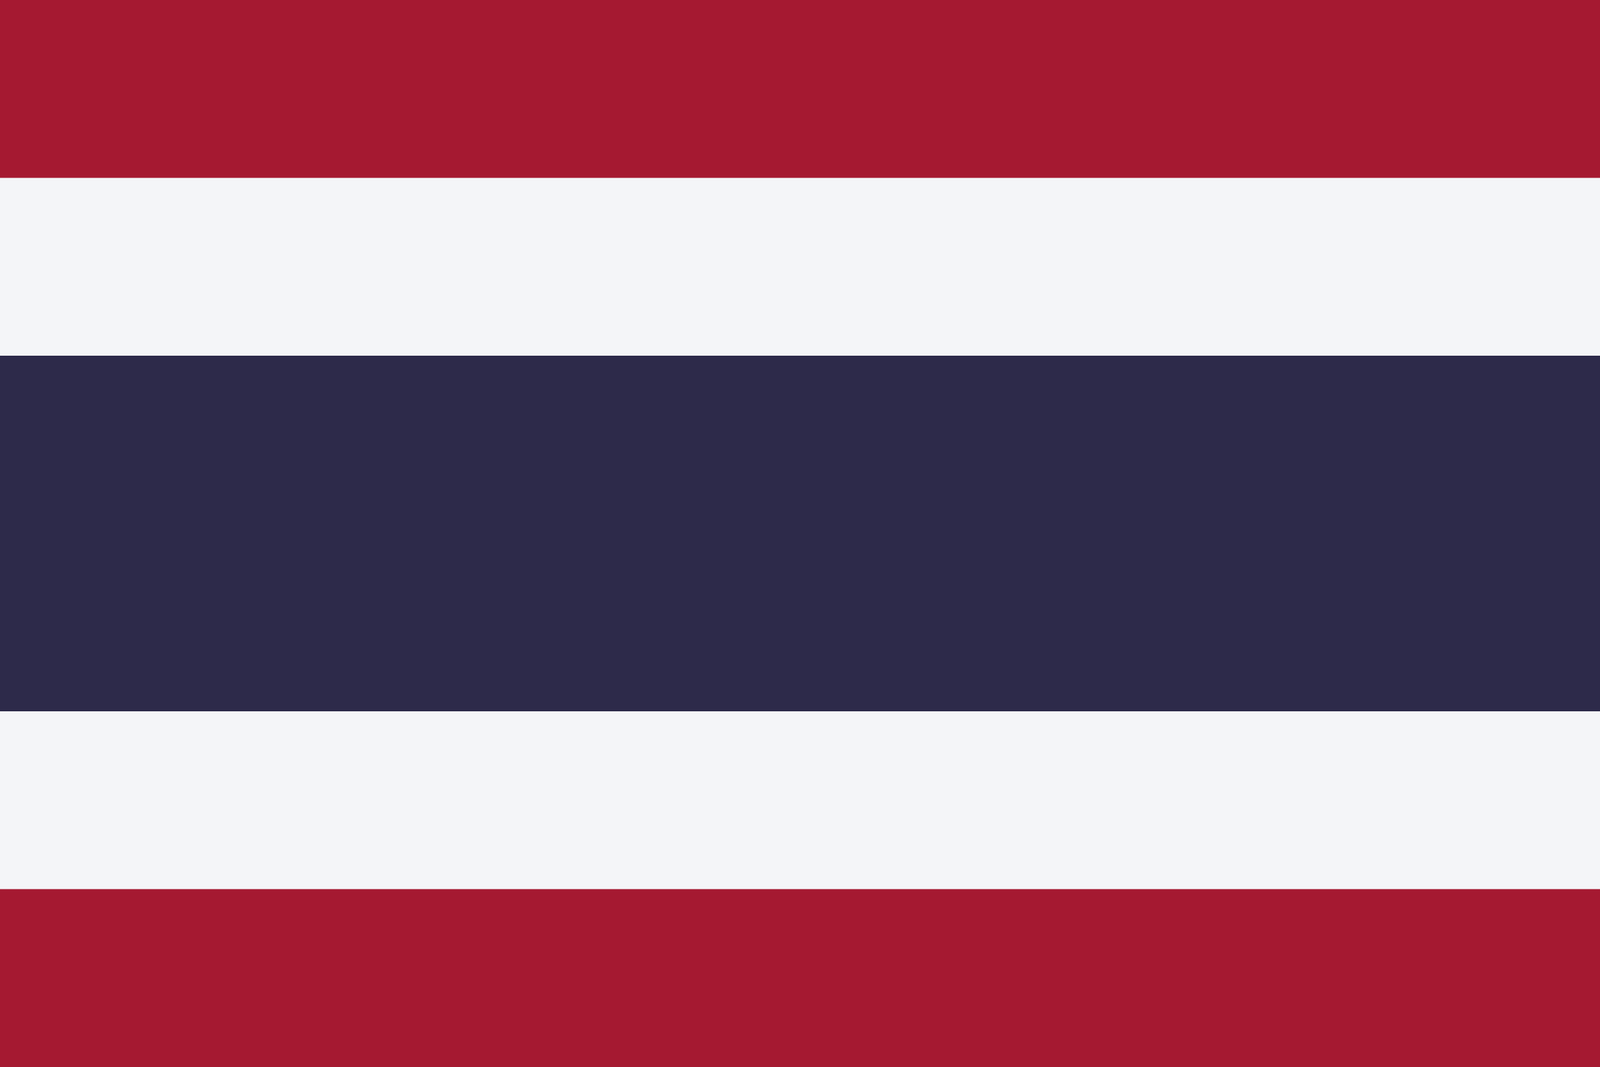 Flag_of_Thailand.svg